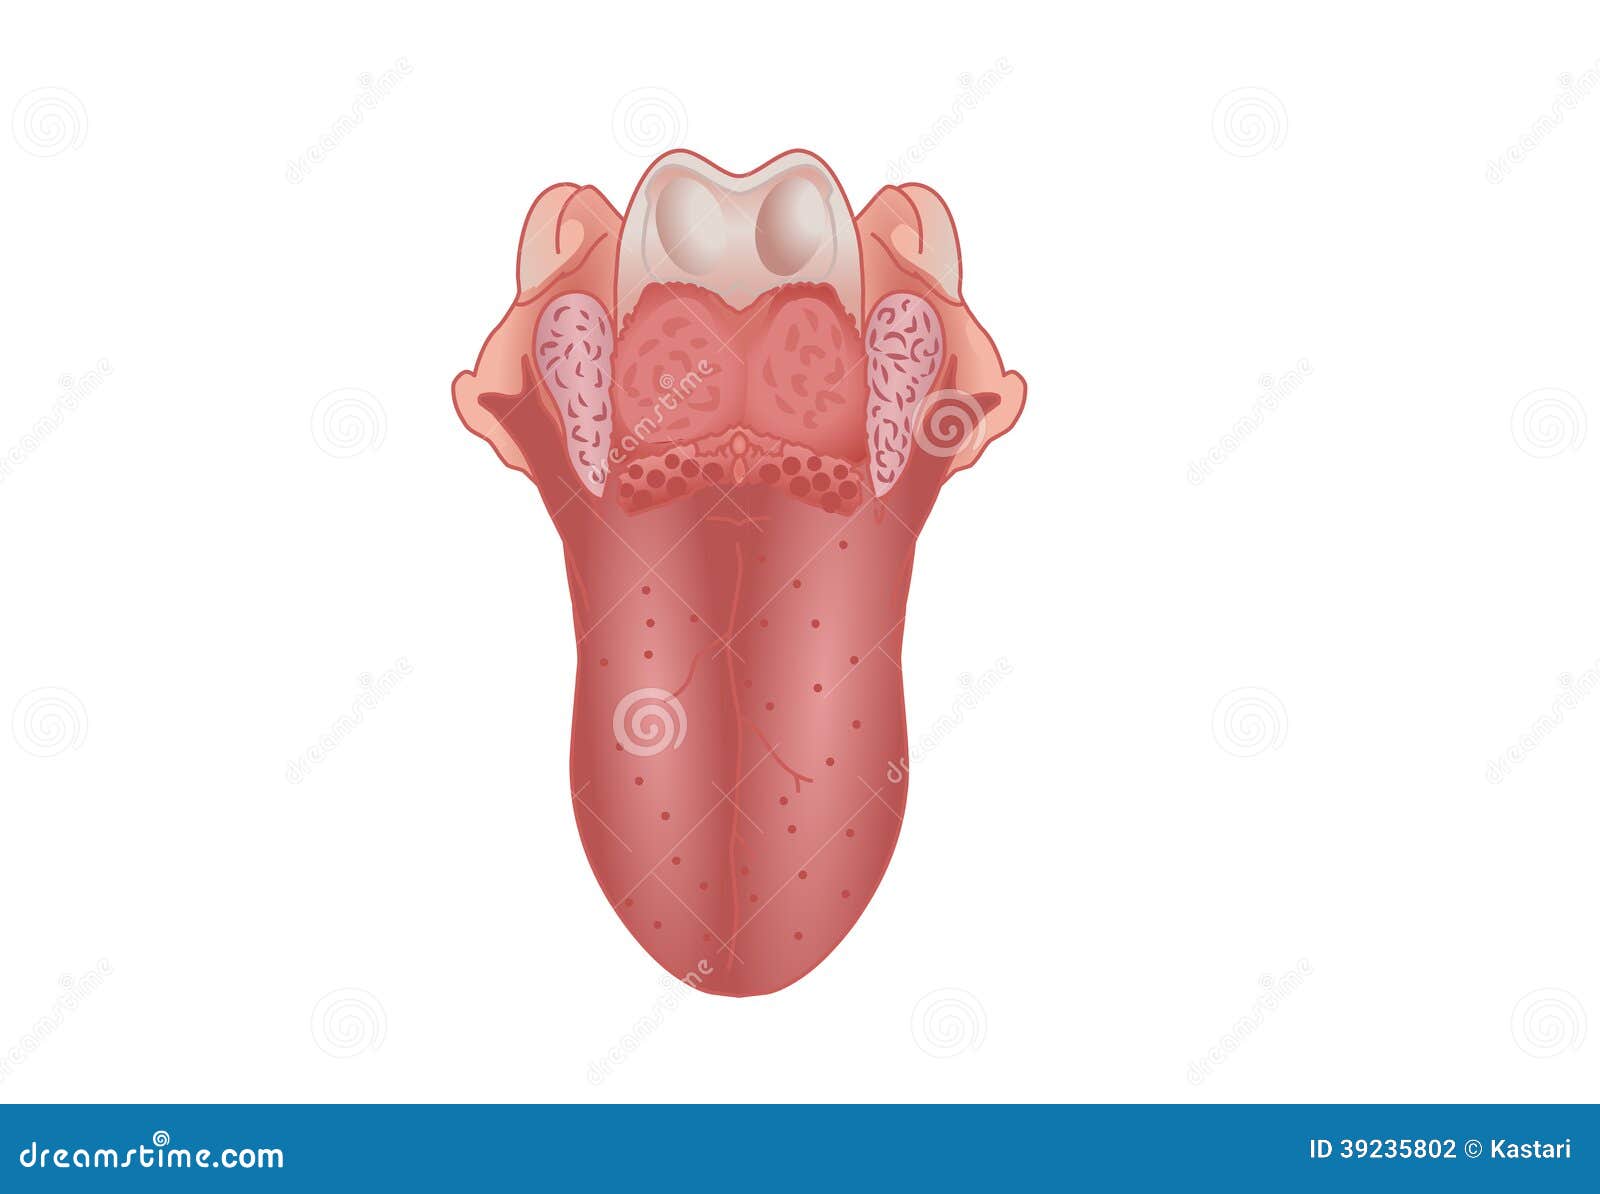 Human Tongue Stock Illustration - Image: 39235802